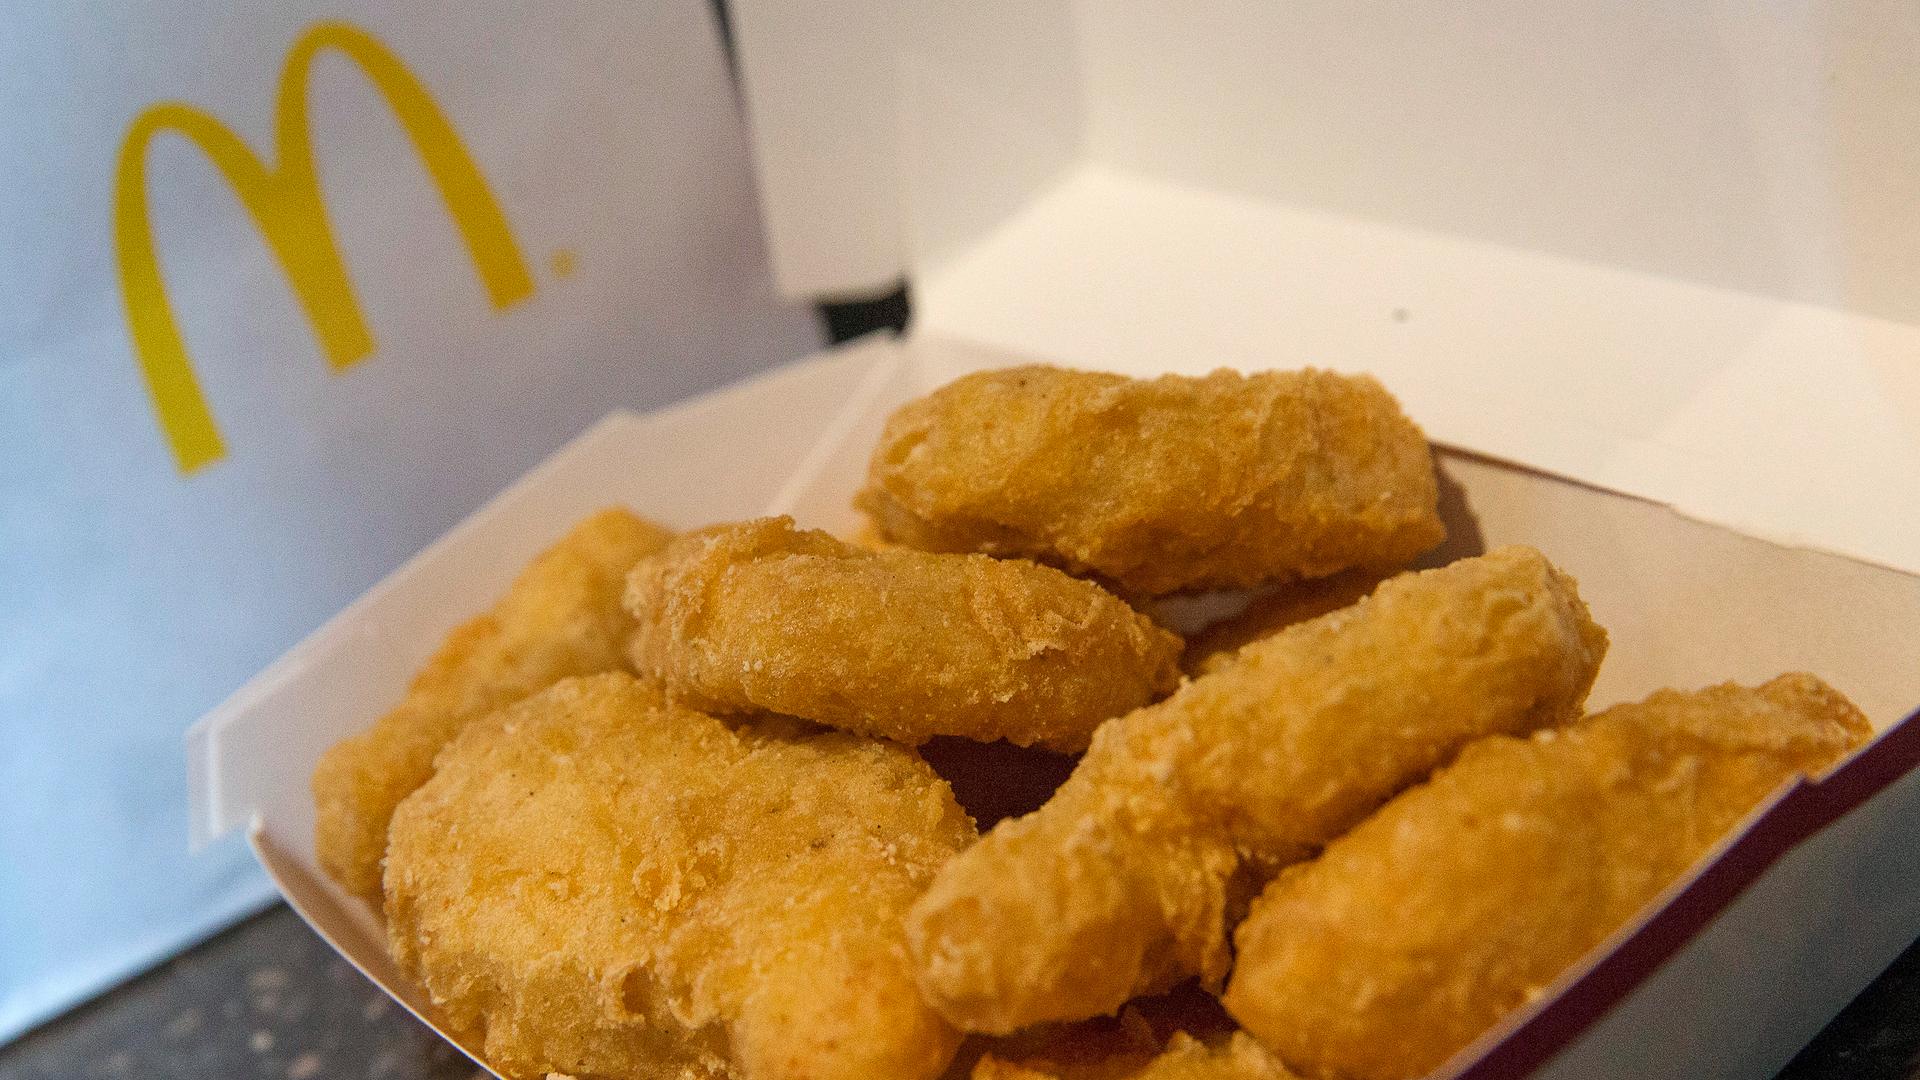 A McDonald's 10 piece chicken McNuggets.